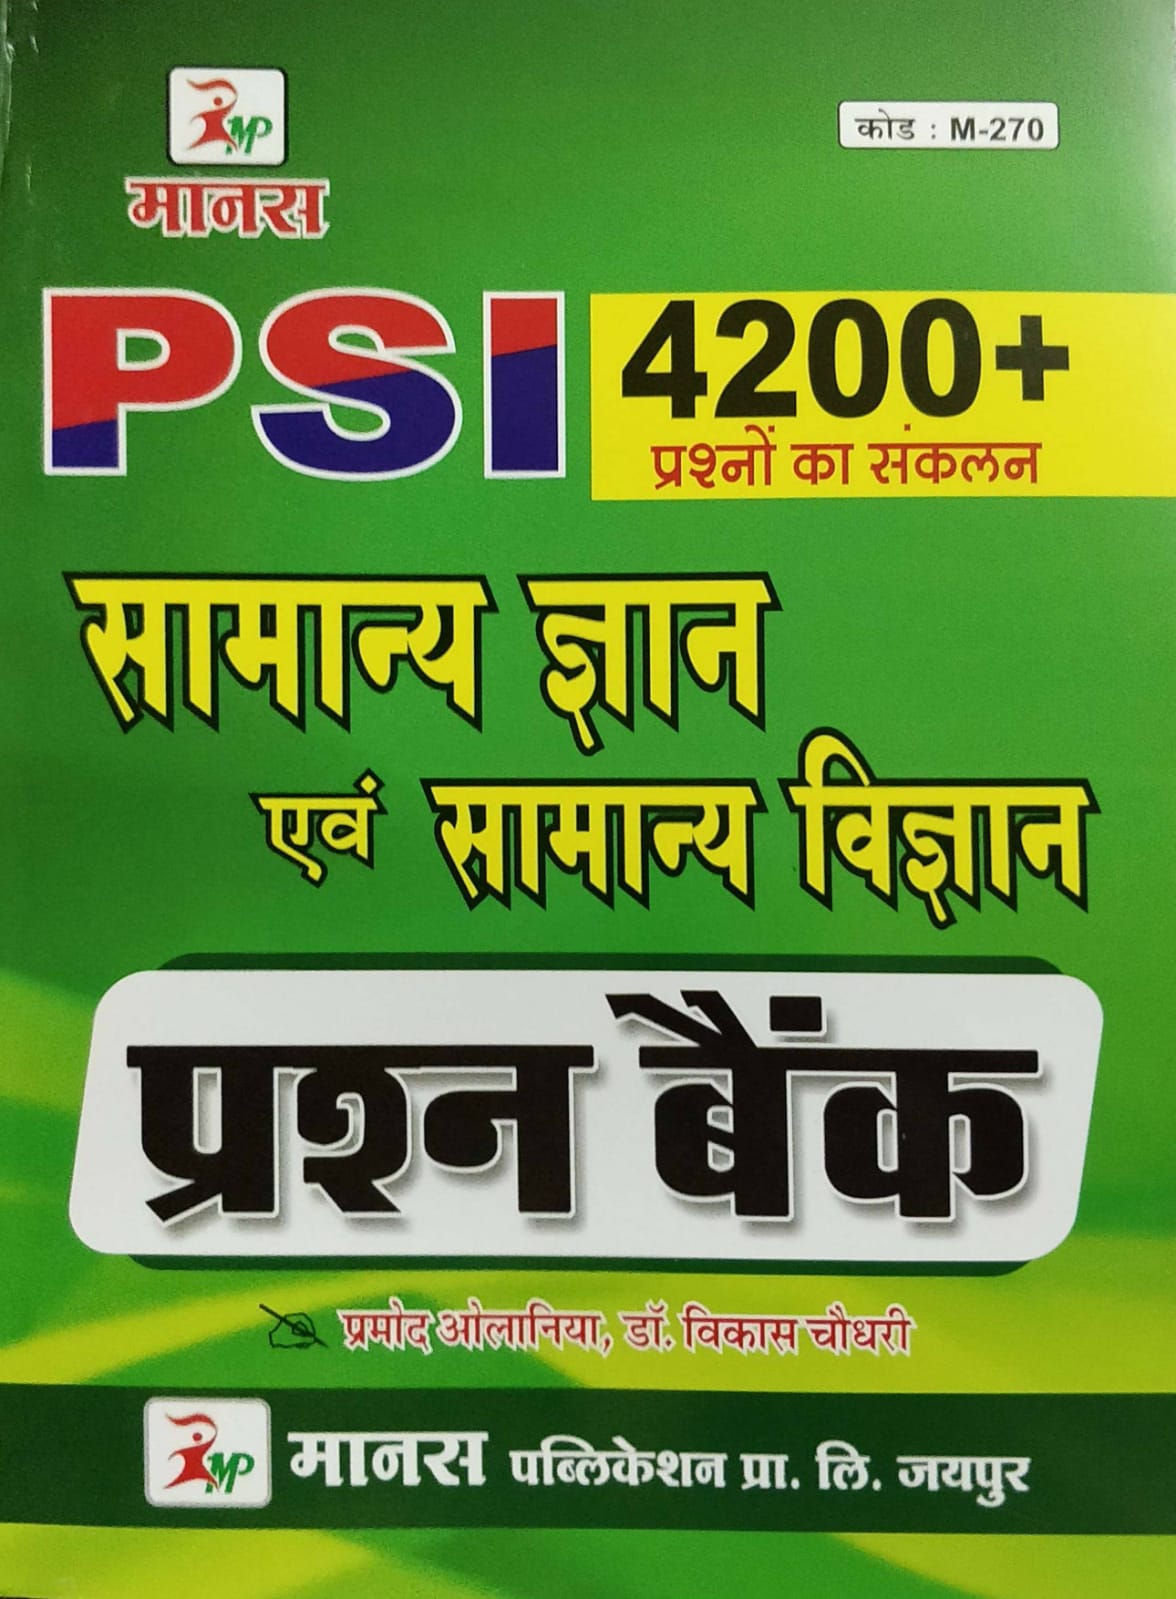 Manas Rajasthan Police Sub – Inspector (PSI) General Knowledge And Science Question Bank 4200+ Prashano Ka Sankaln For PSI Examination By Pramod Olaniya And Dr. Vikas Choudhary